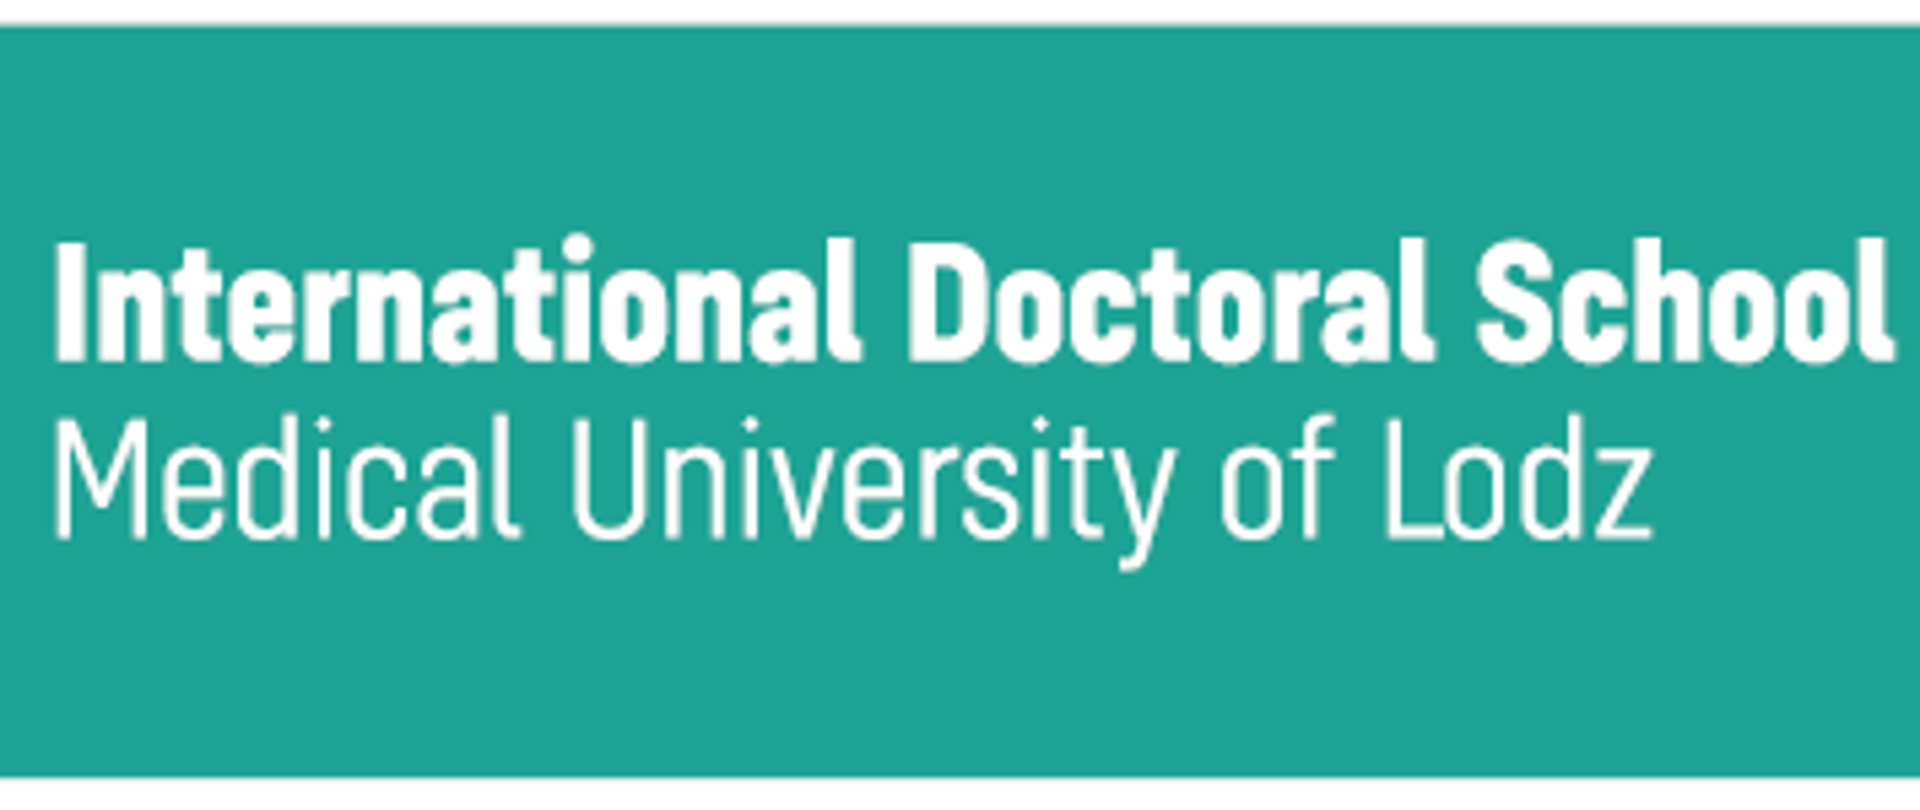 International Doctoral School